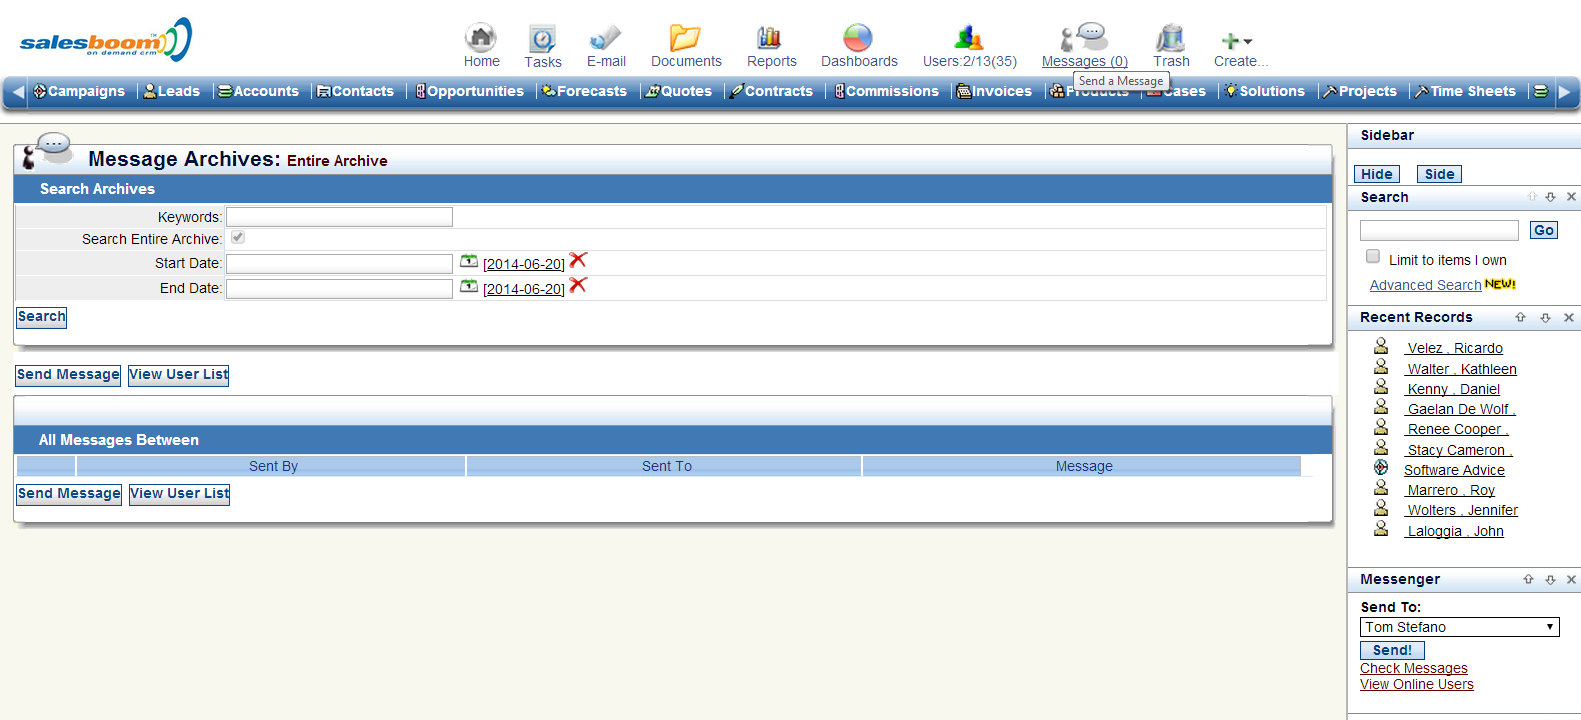 CRM Software Screenshots - CRM Email Integration